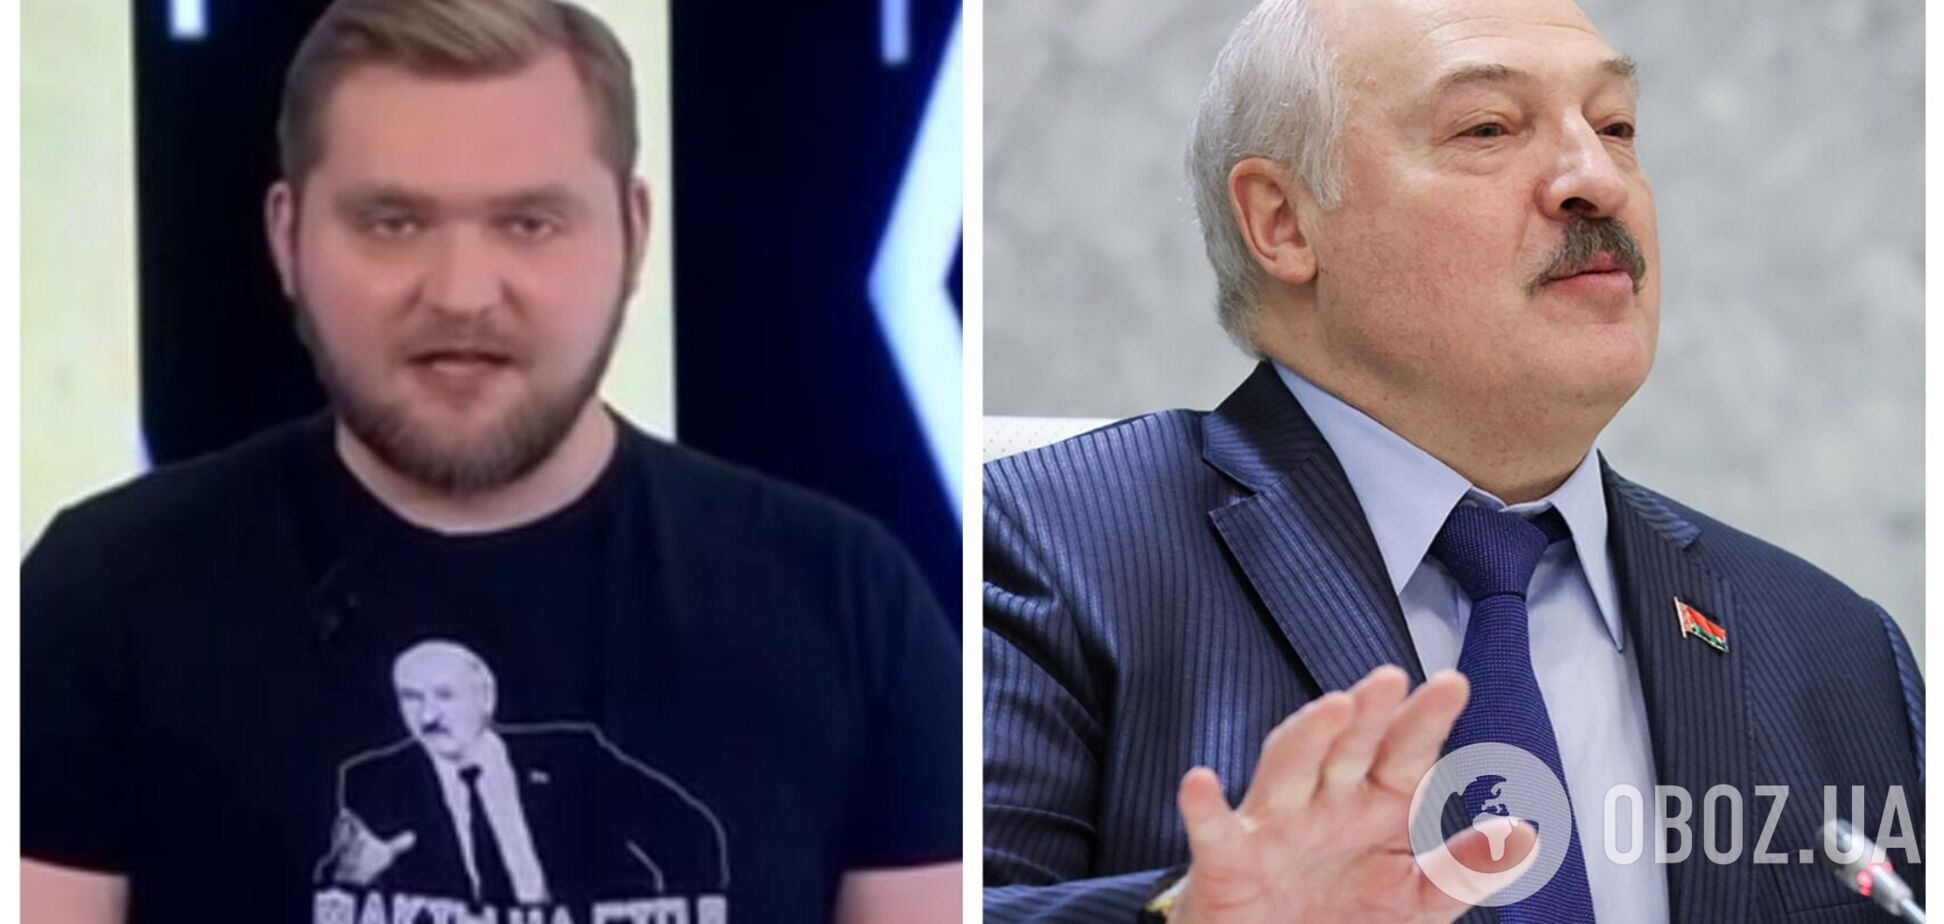 Беларуский пропагандист заявил, что Европа мечтает о 'правителе' Лукашенко. Видео